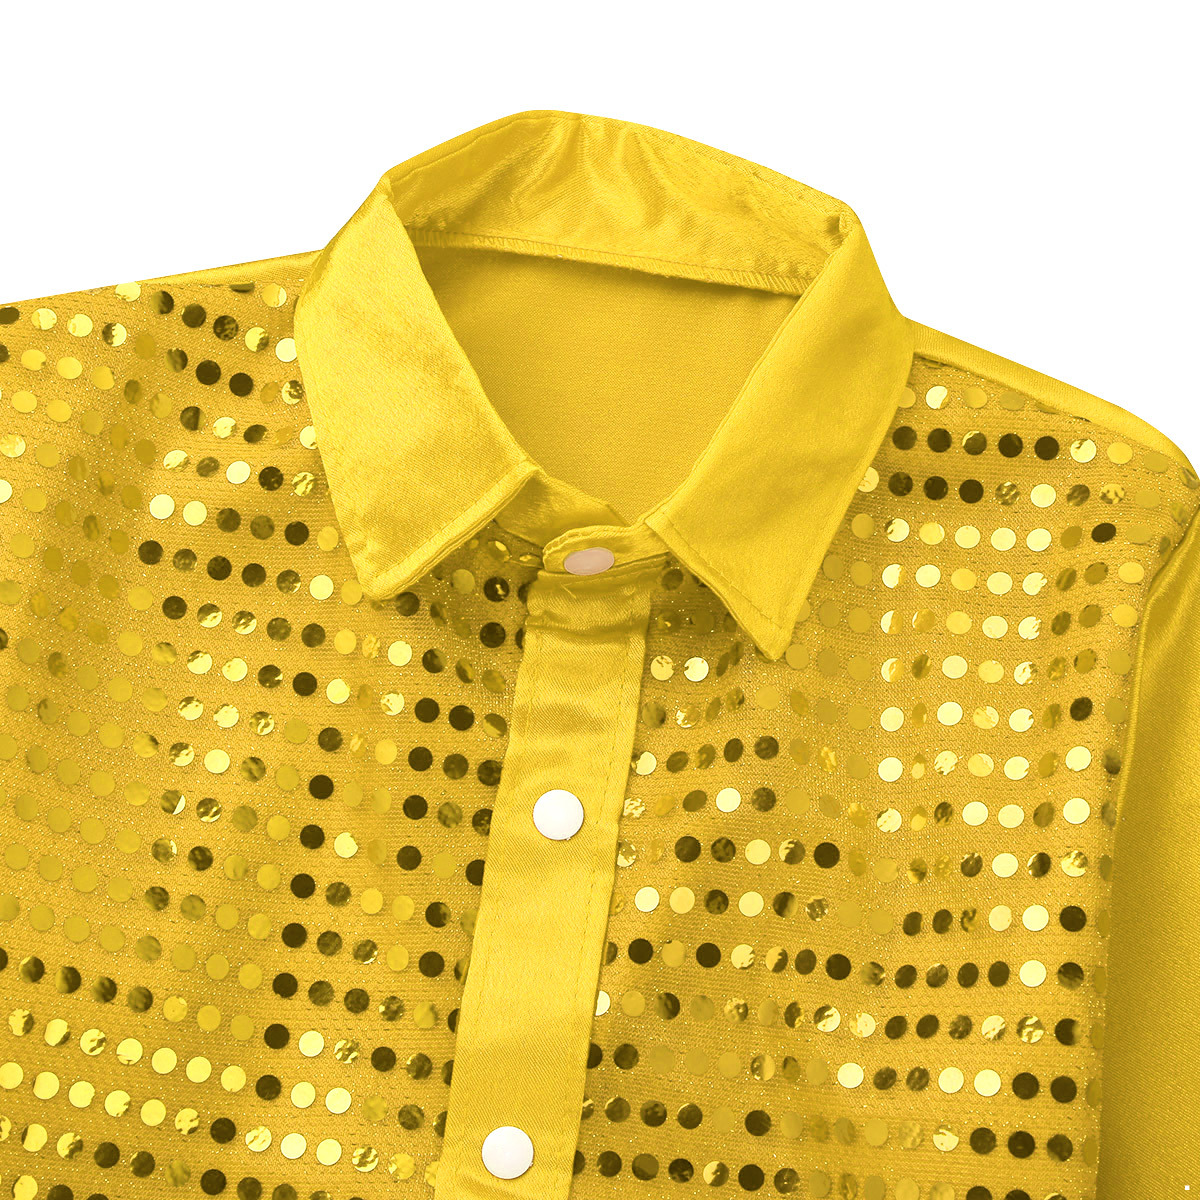 YiZYiF Kids Boys Long Sleeve Tops Shiny Sequined Shirt Jazz Dance Costume - image 5 of 7